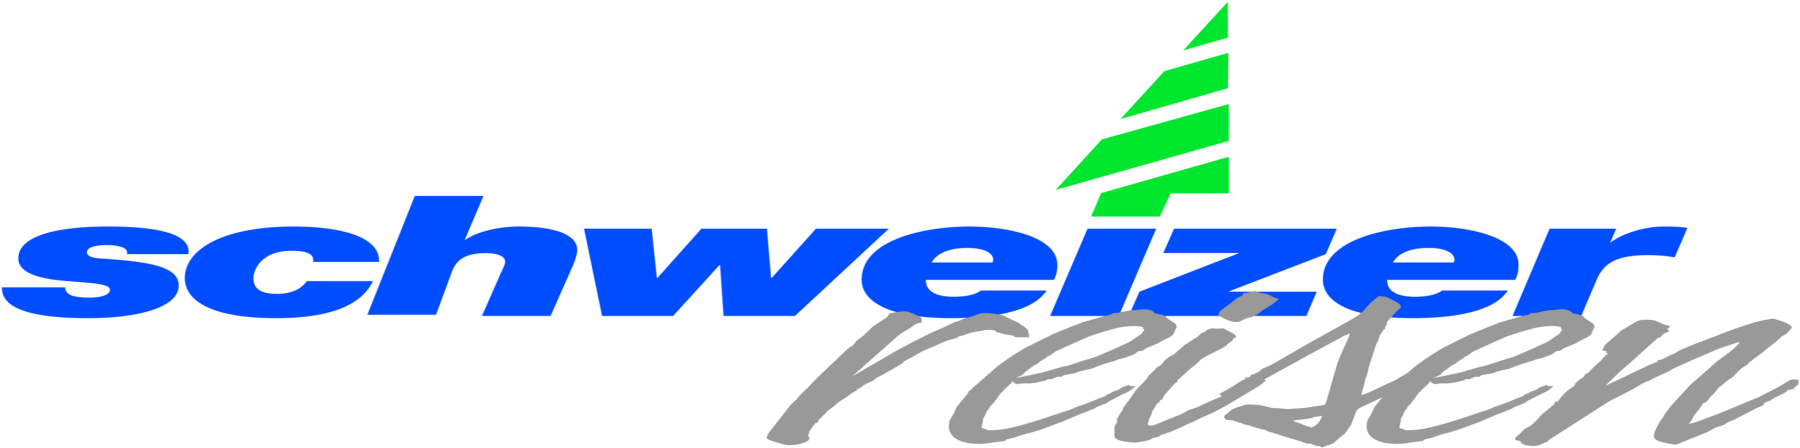 1_Schweizer-Logo-Reisen_4c-NEU-gross-schmaler